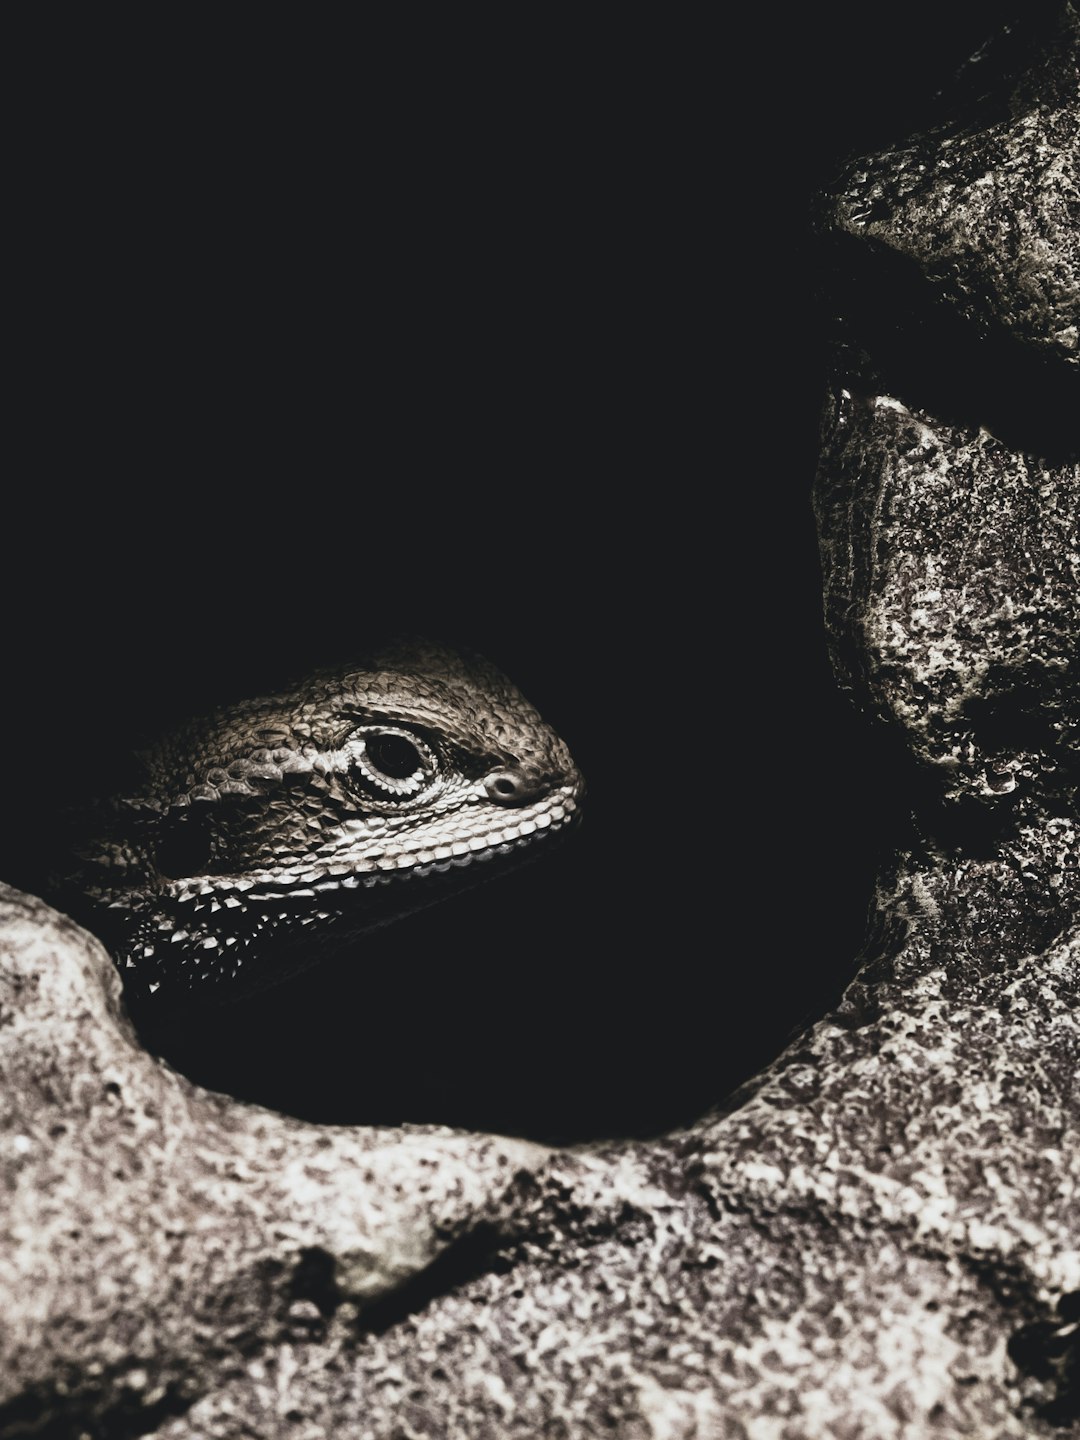 black and brown lizard on brown rock